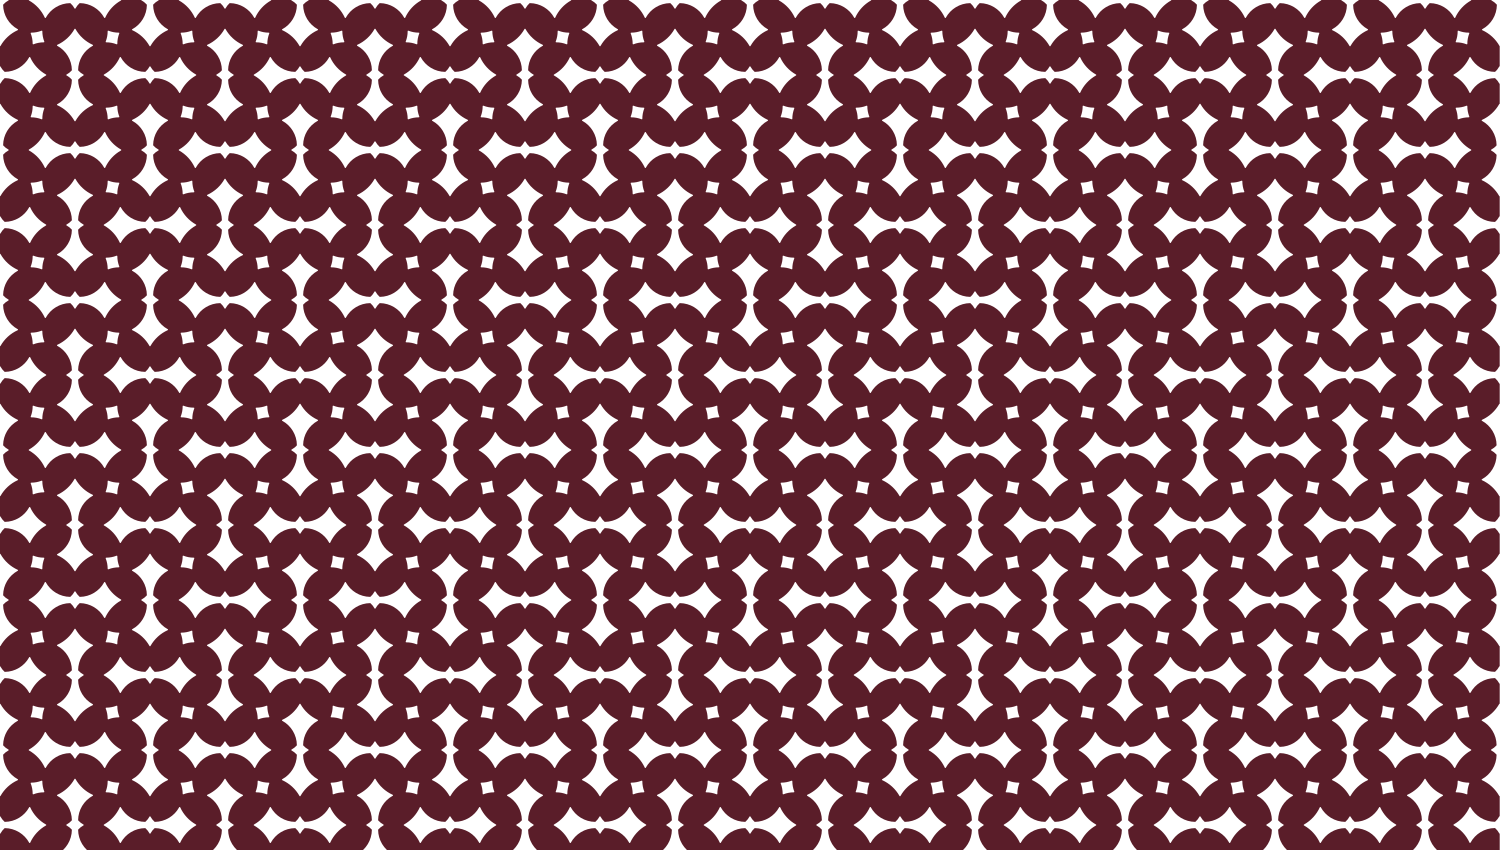 Parasoleil™ Zelda© pattern displayed with a burgundy color overlay